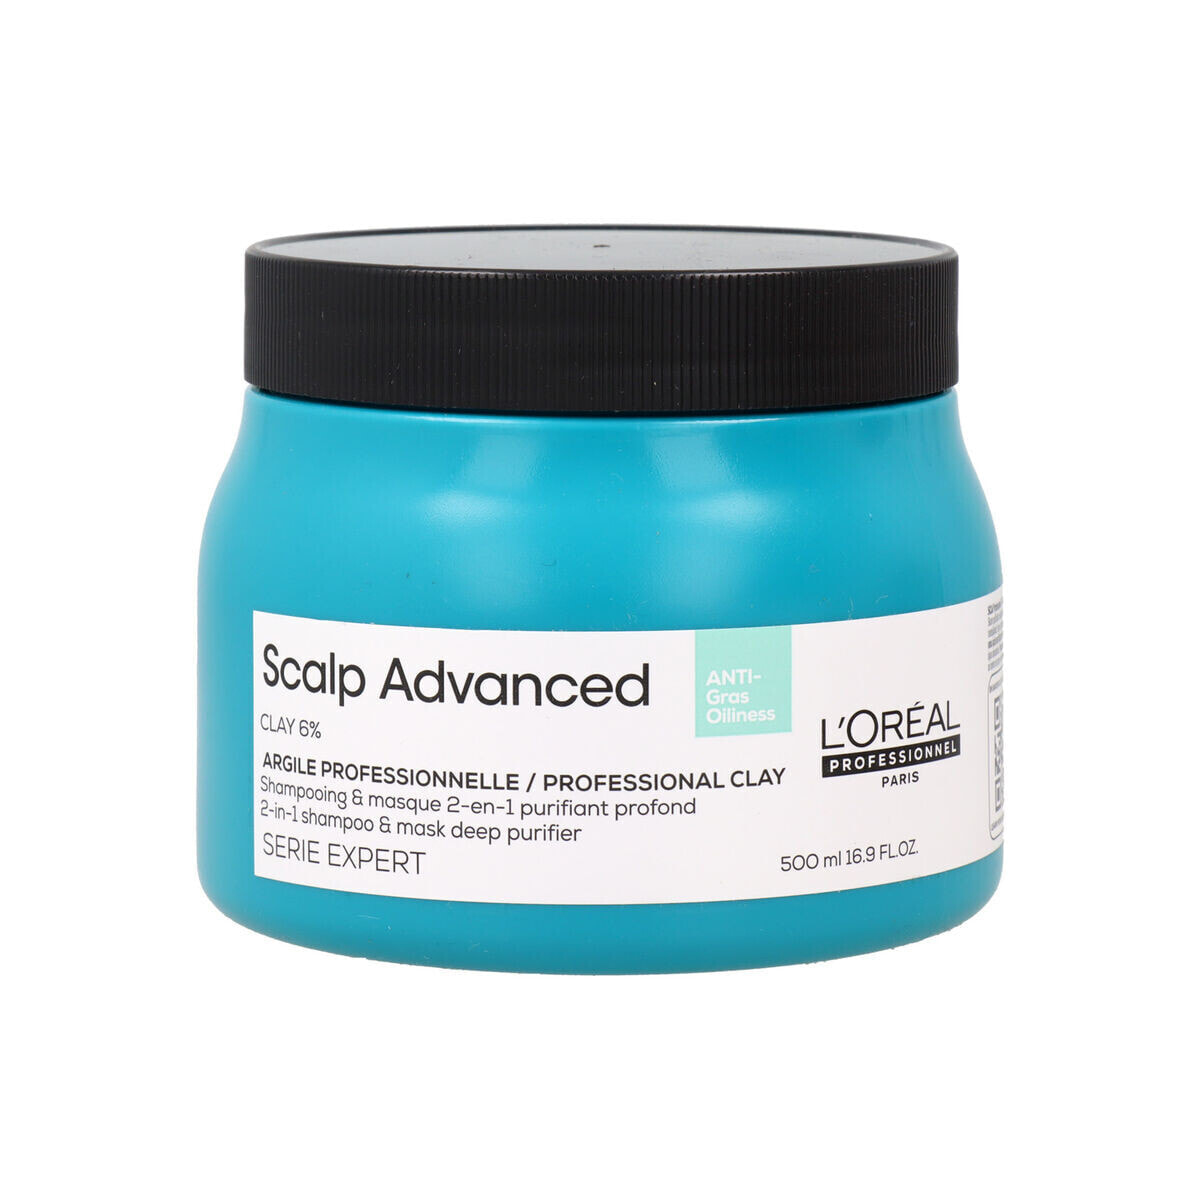 SCALP ADVANCED anti-oiliness 2-in1 shampoo & mask deep purifier clay 500 ml